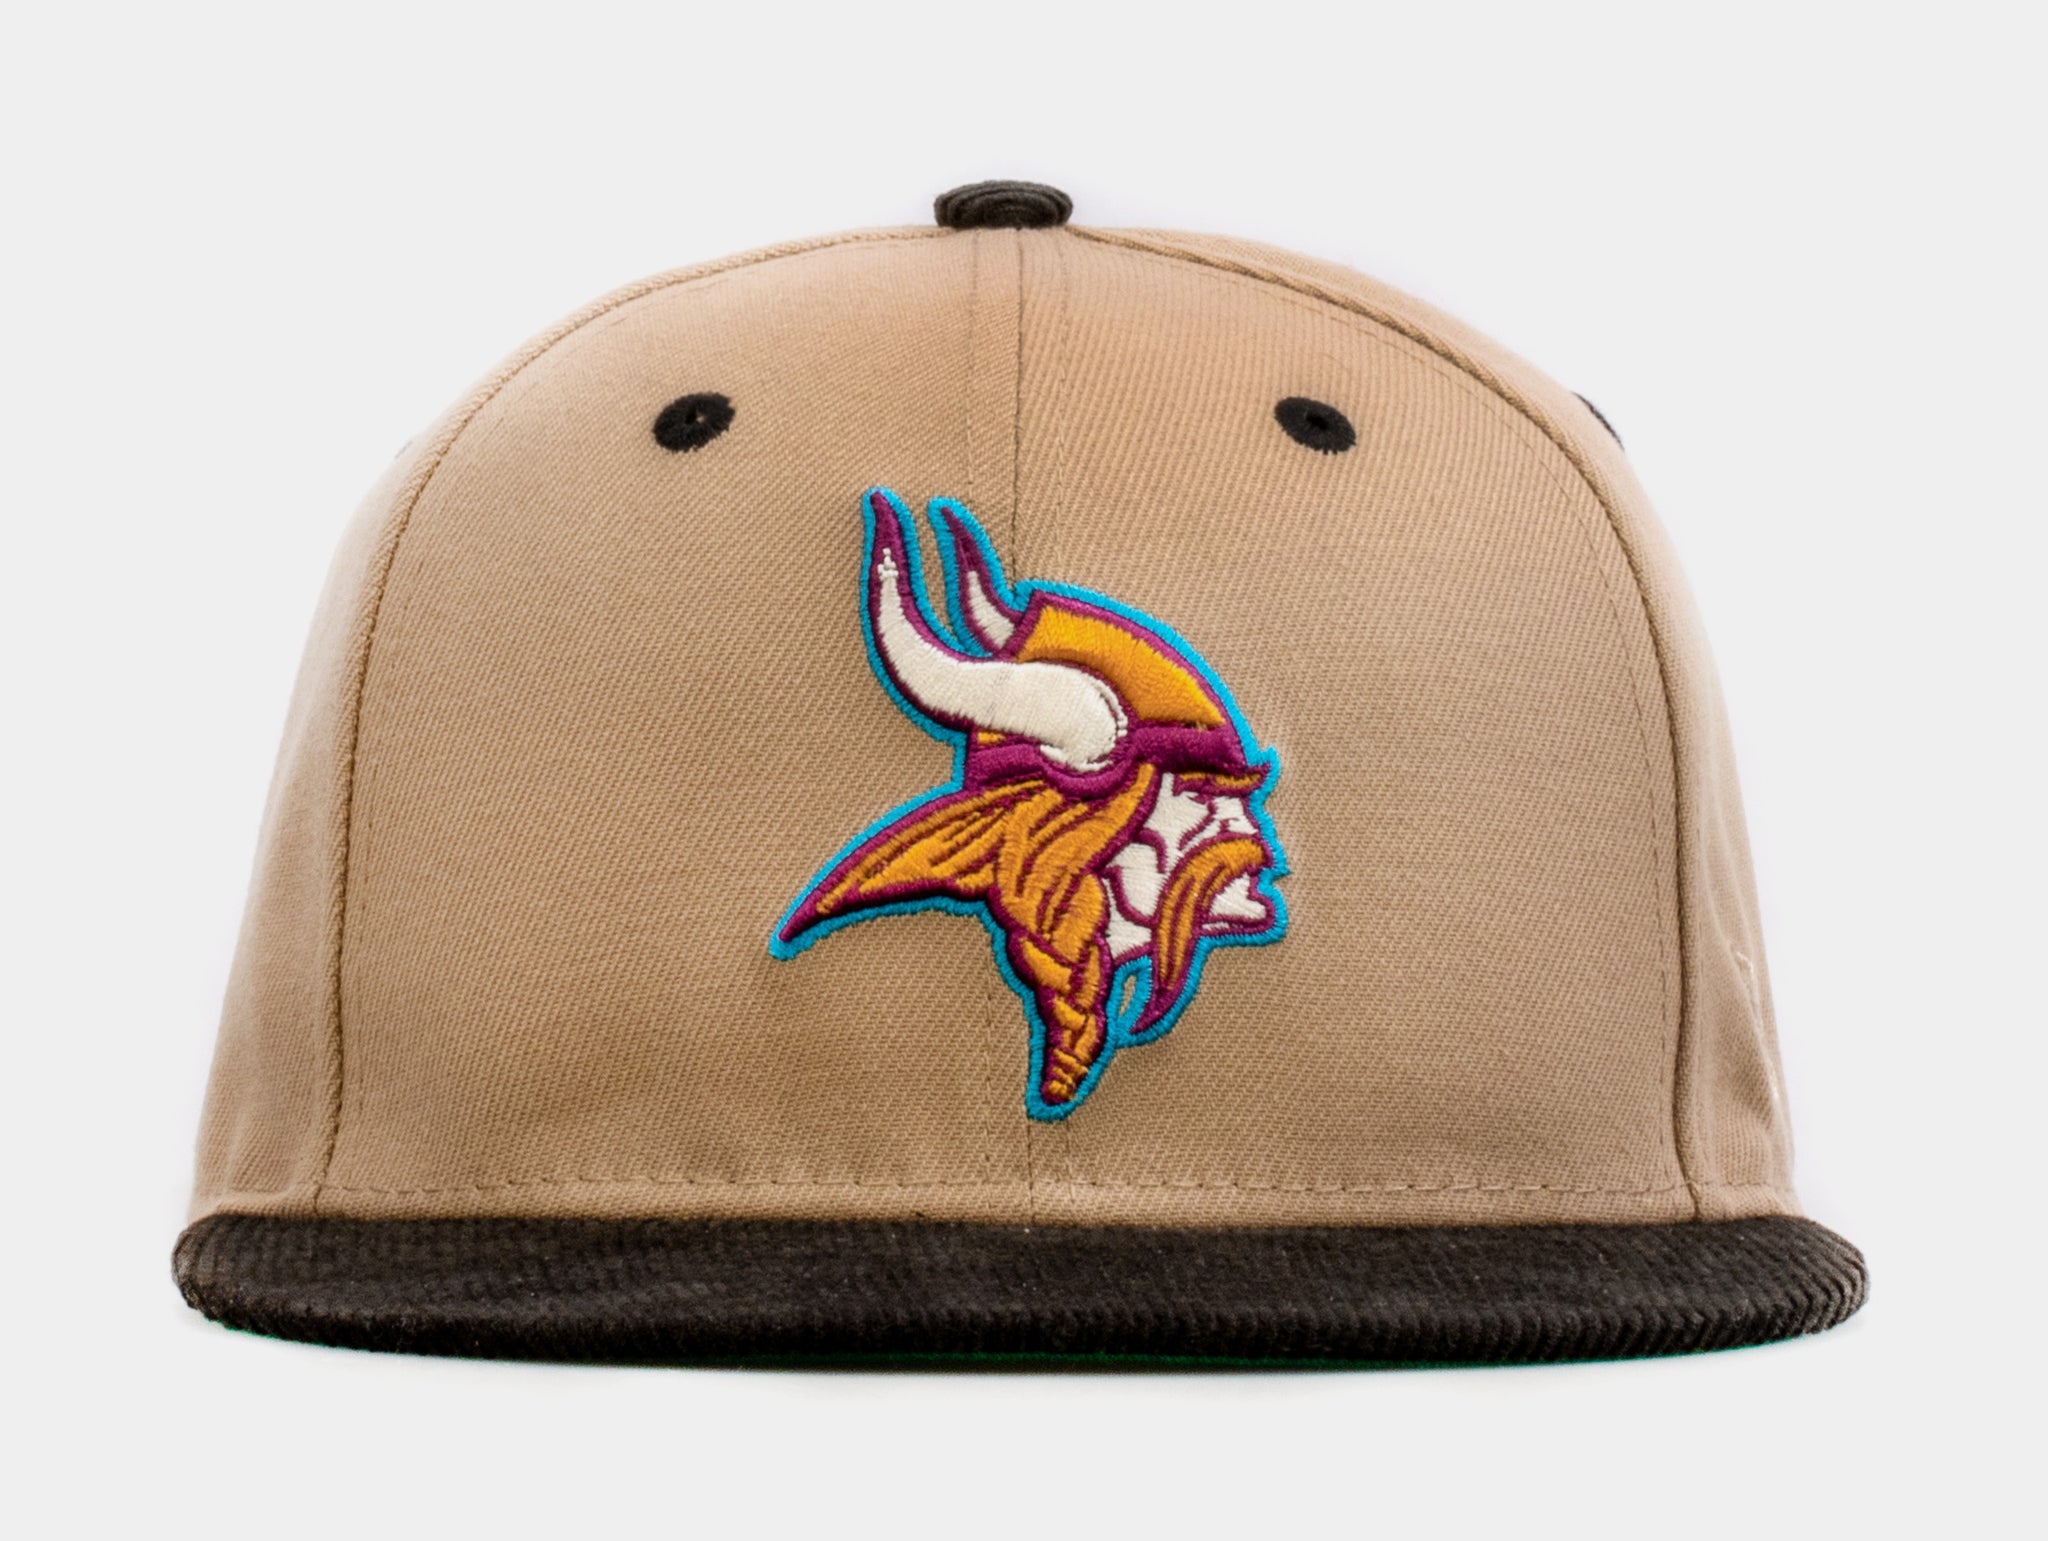 New Era SP Exclusive Desert Sky Minnesota Vikings 59FIFTY Mens Fitted Hat (Beige/Black)